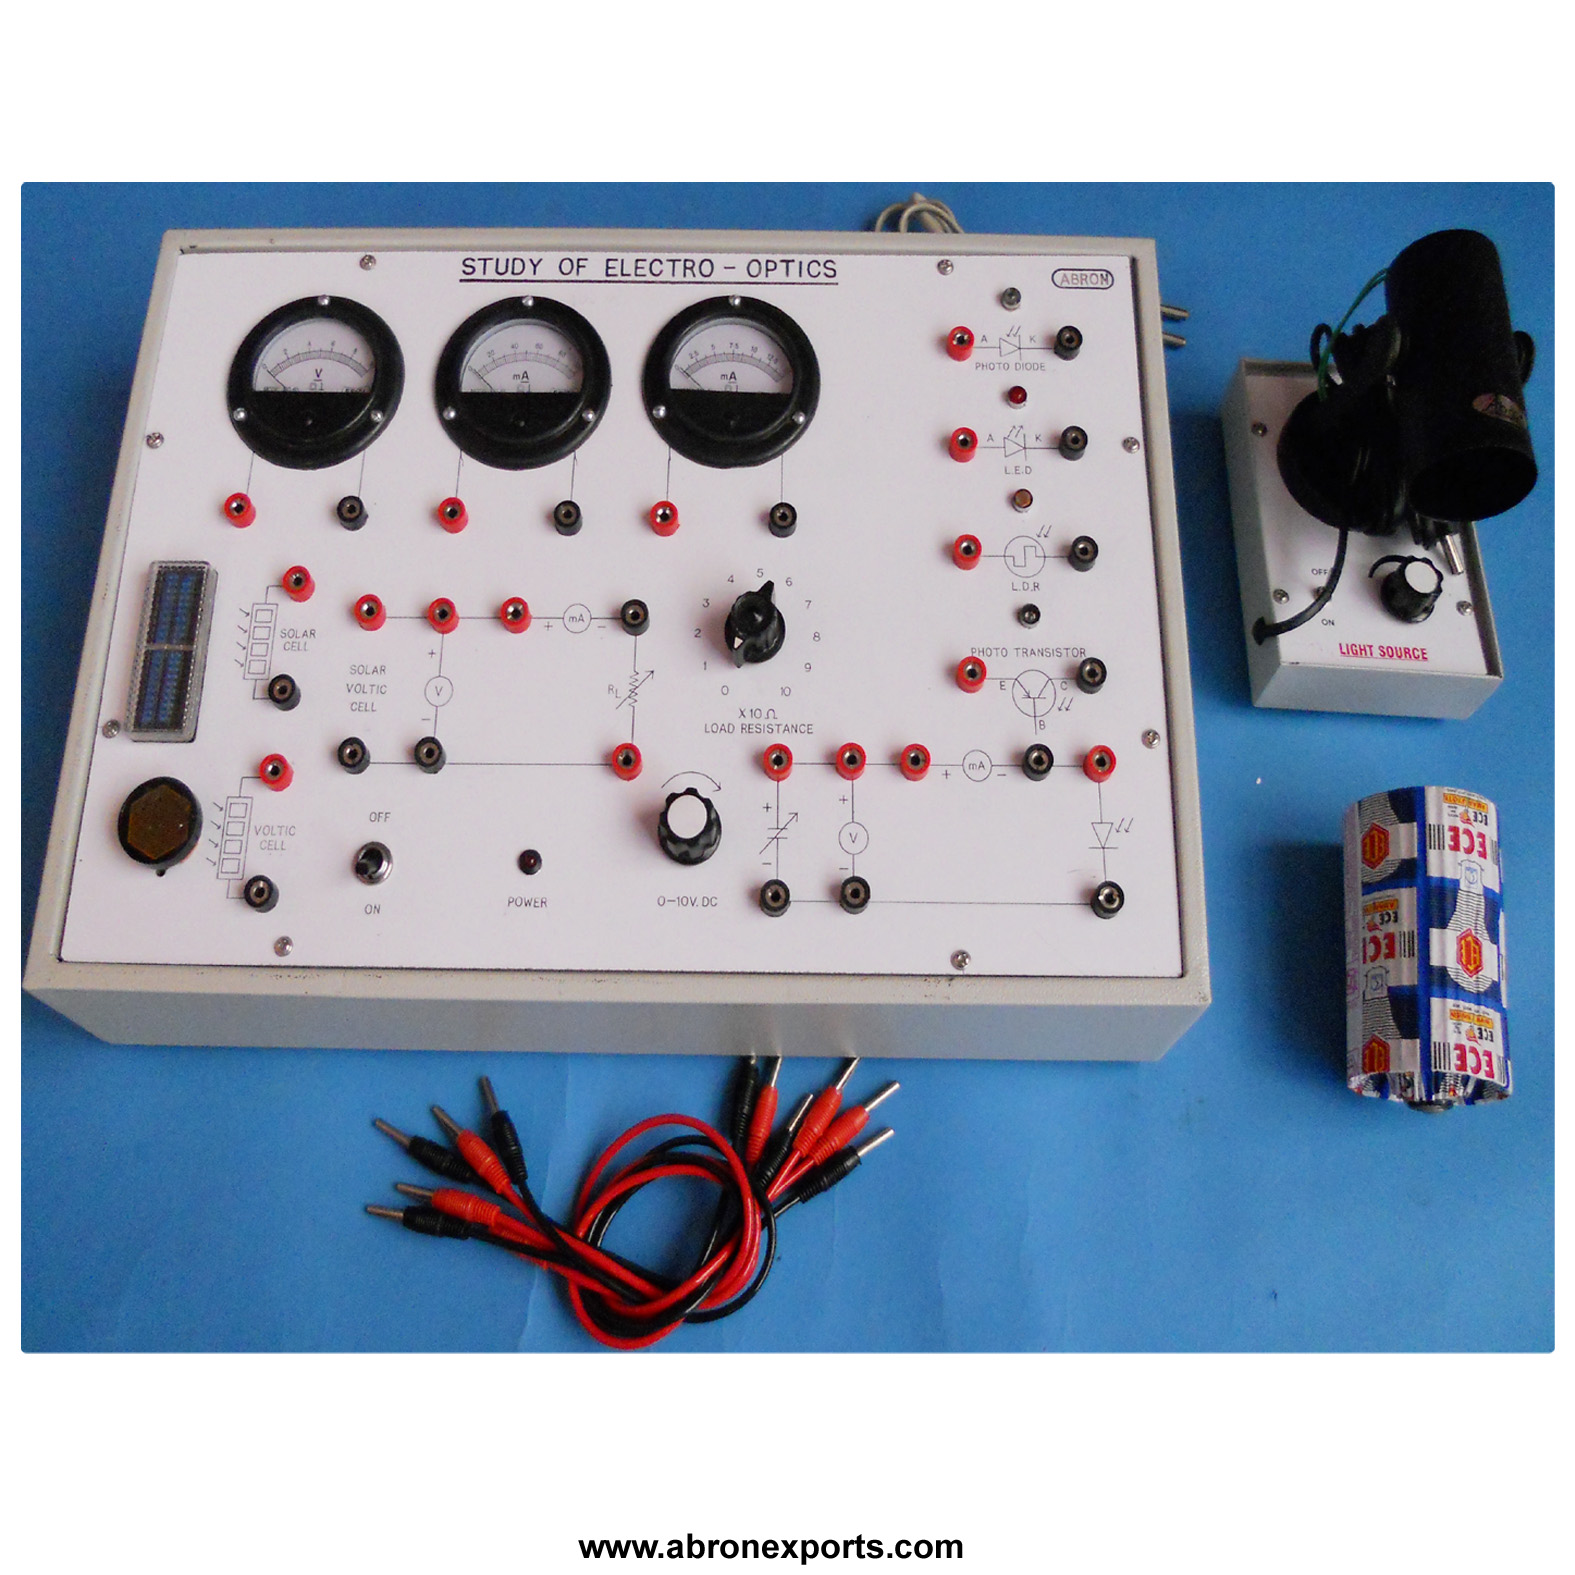 Electro optics study kit photocell led LDR power supply with lamp house abron AE-1322e